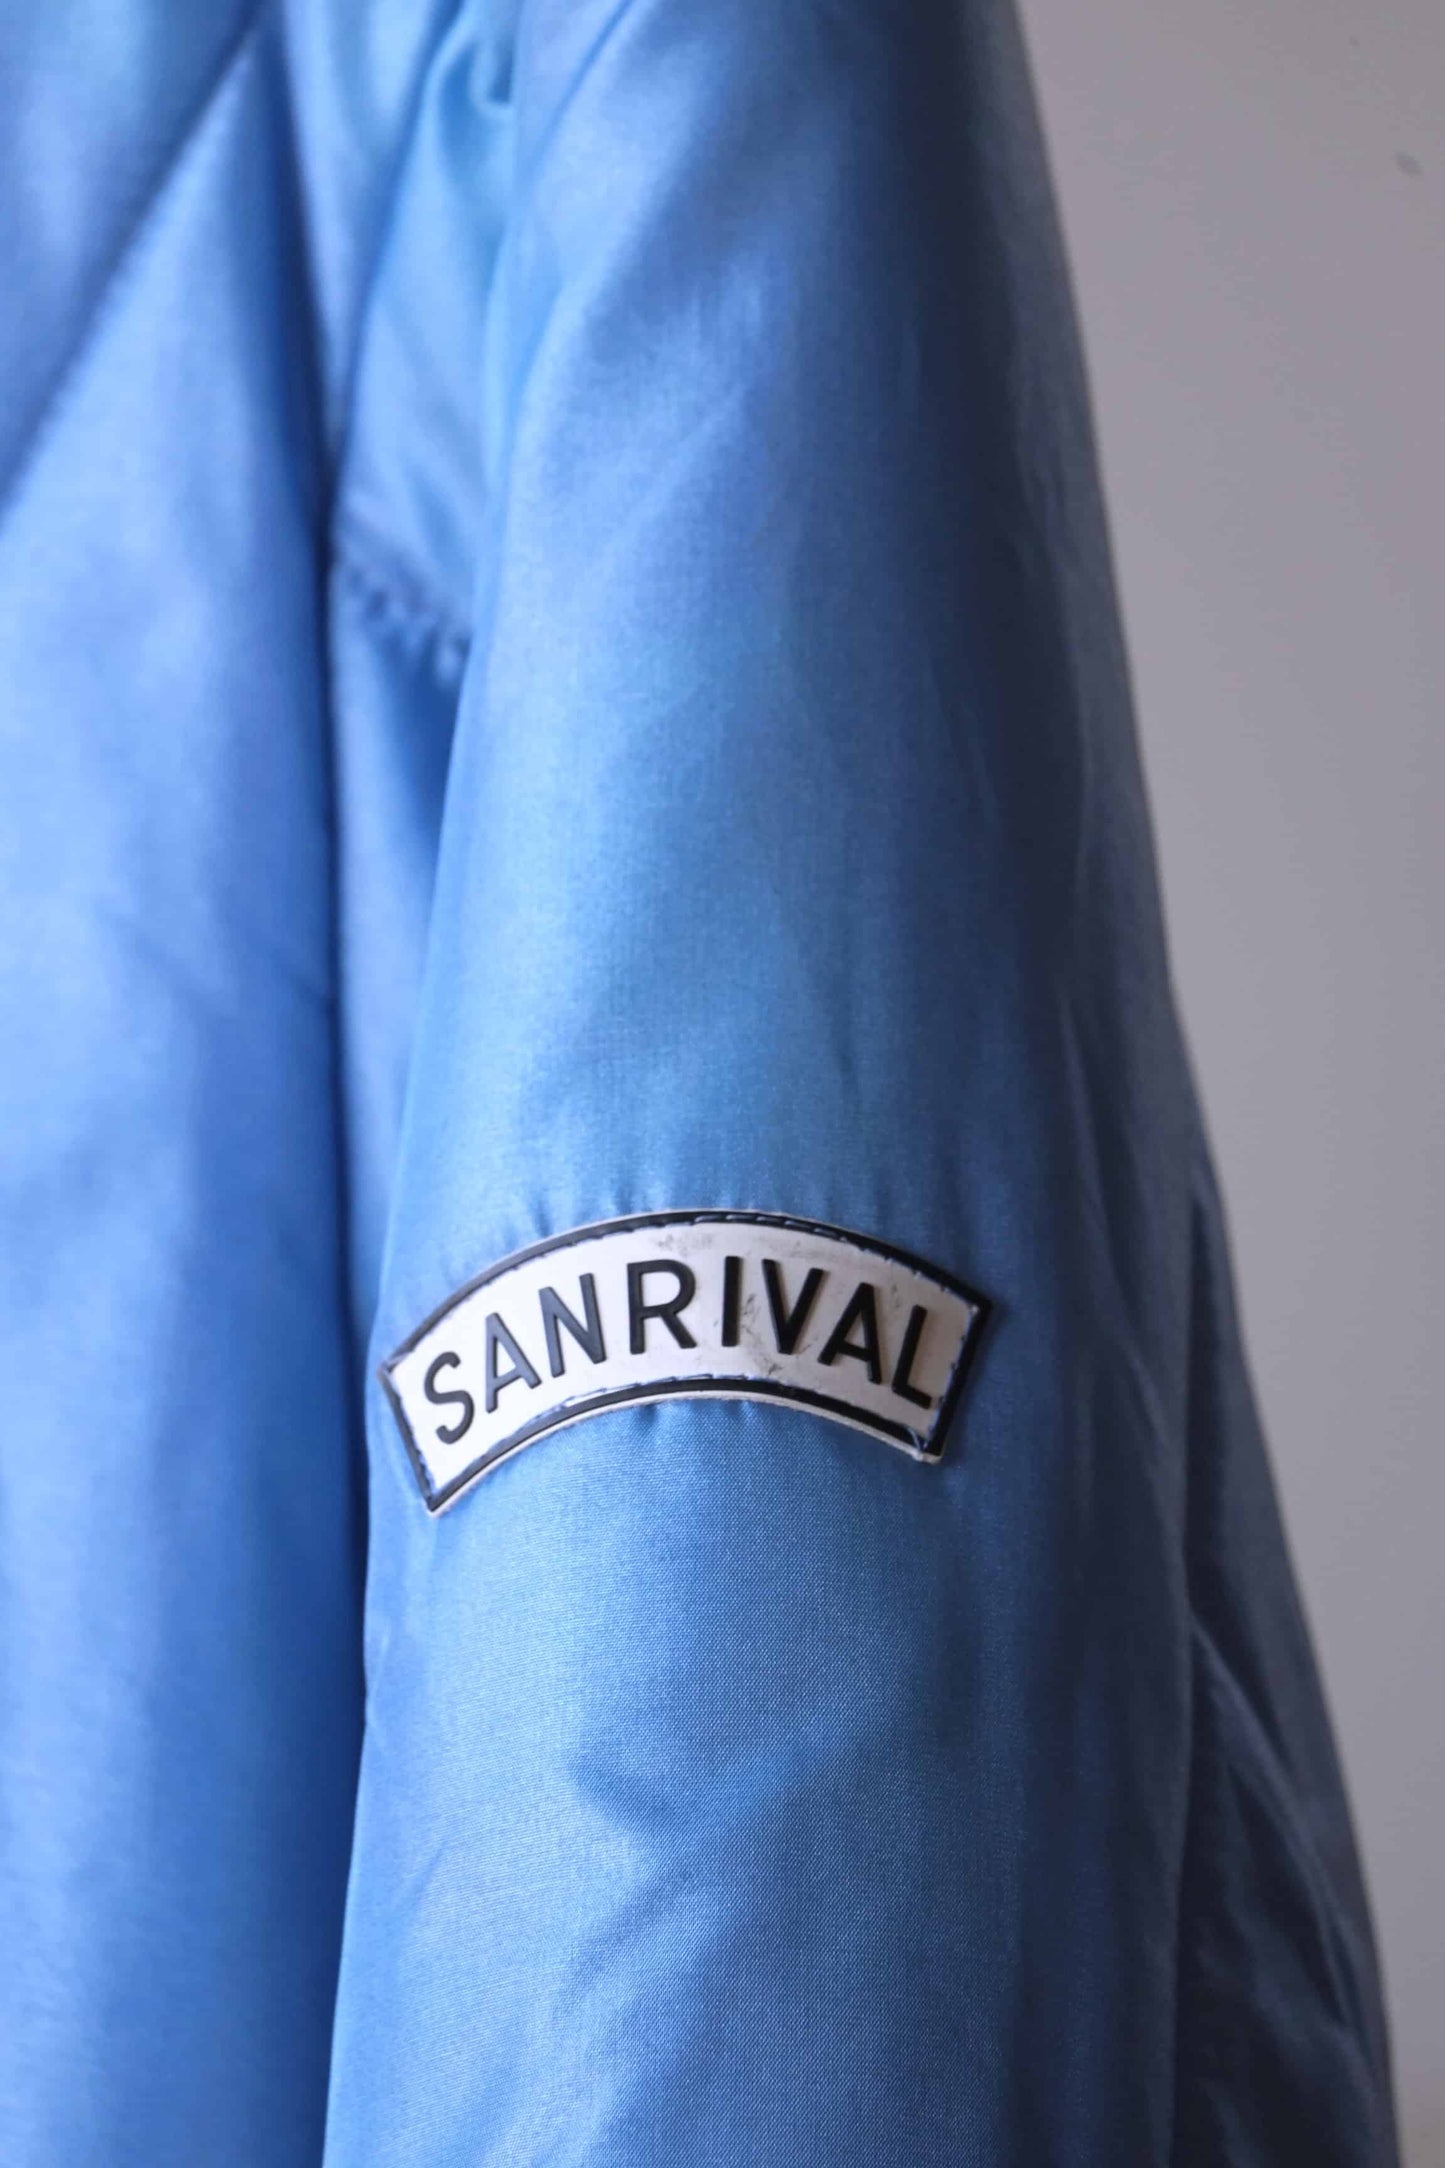 Detail of logo on the sleeve of Sanrival vintage 70s ski jacket.